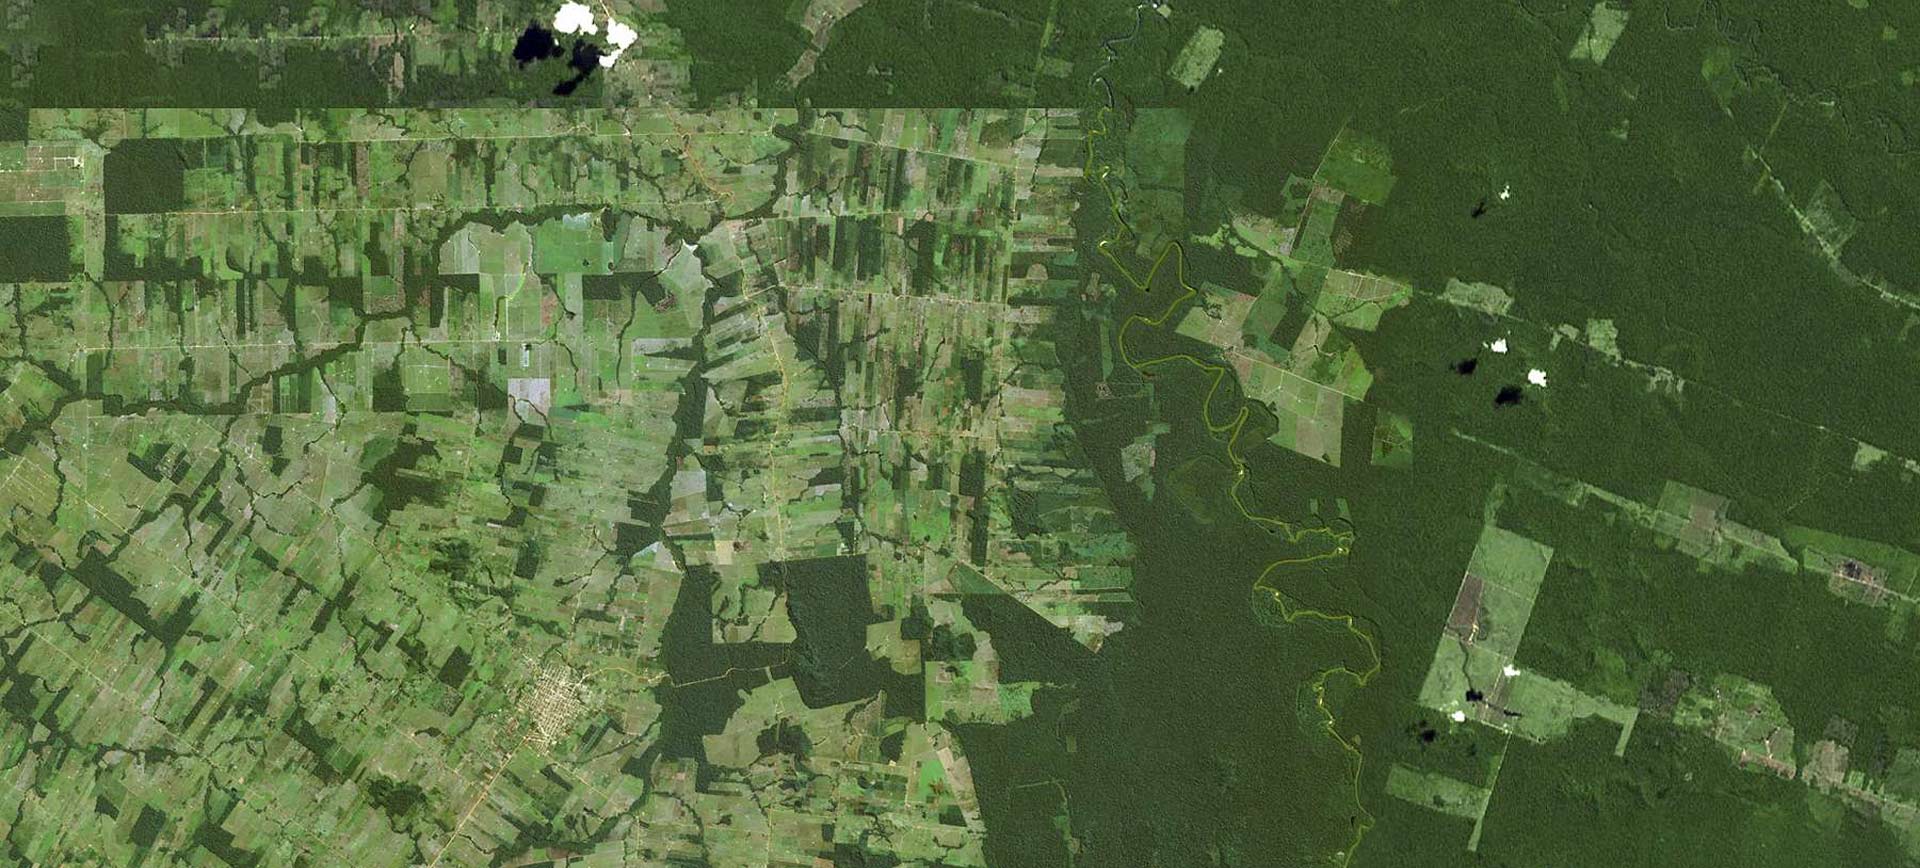  SPOT 7  satellite image, 1.5m resolution- June 2020